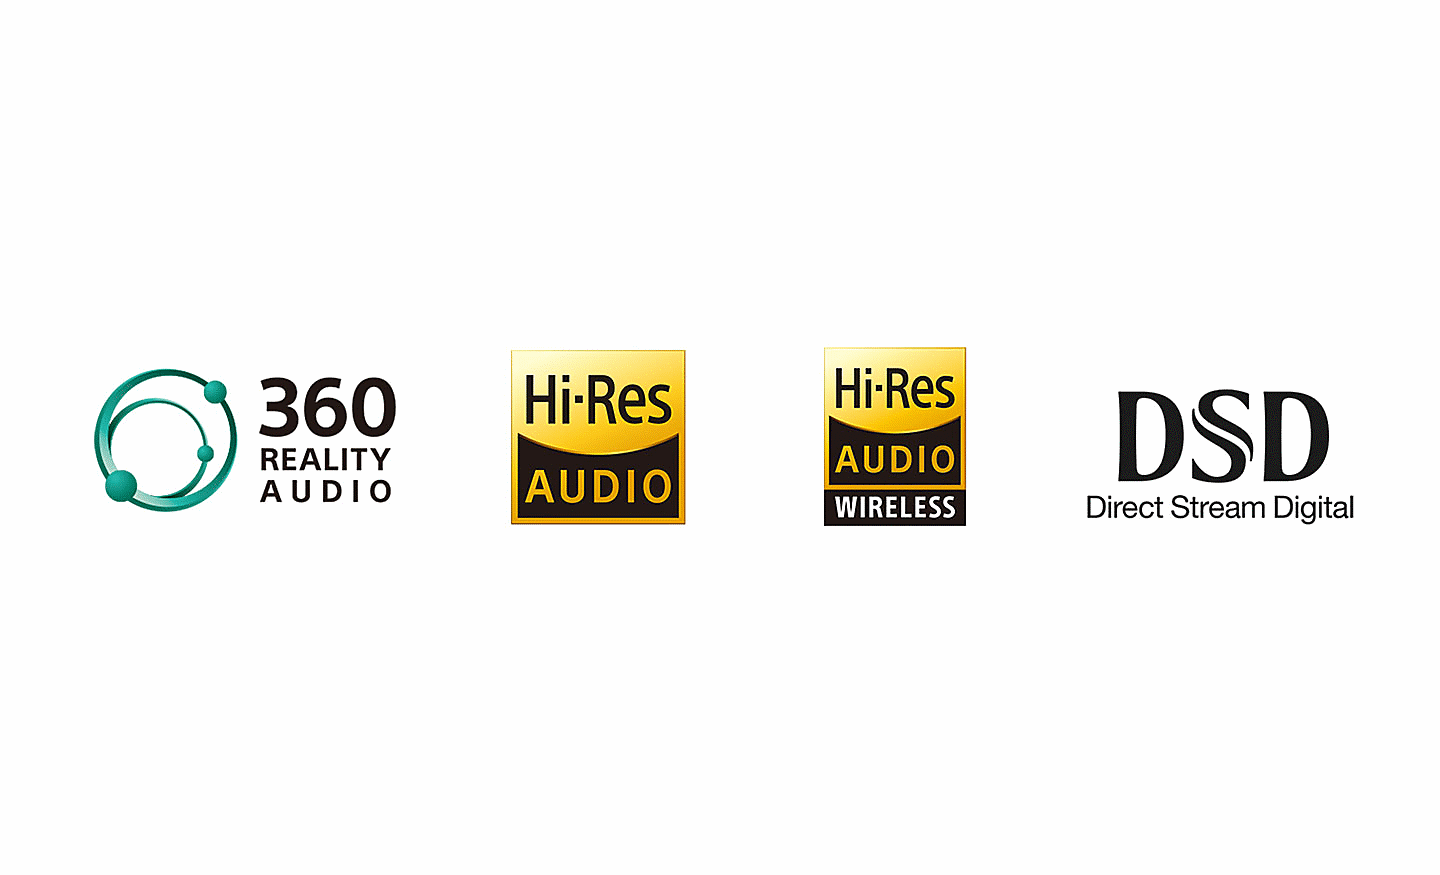 360 Reality Audio logo, Hi-Res Audio logo, Hi-Res Audio Wireless logo, DSD Direct Stream Digital logo